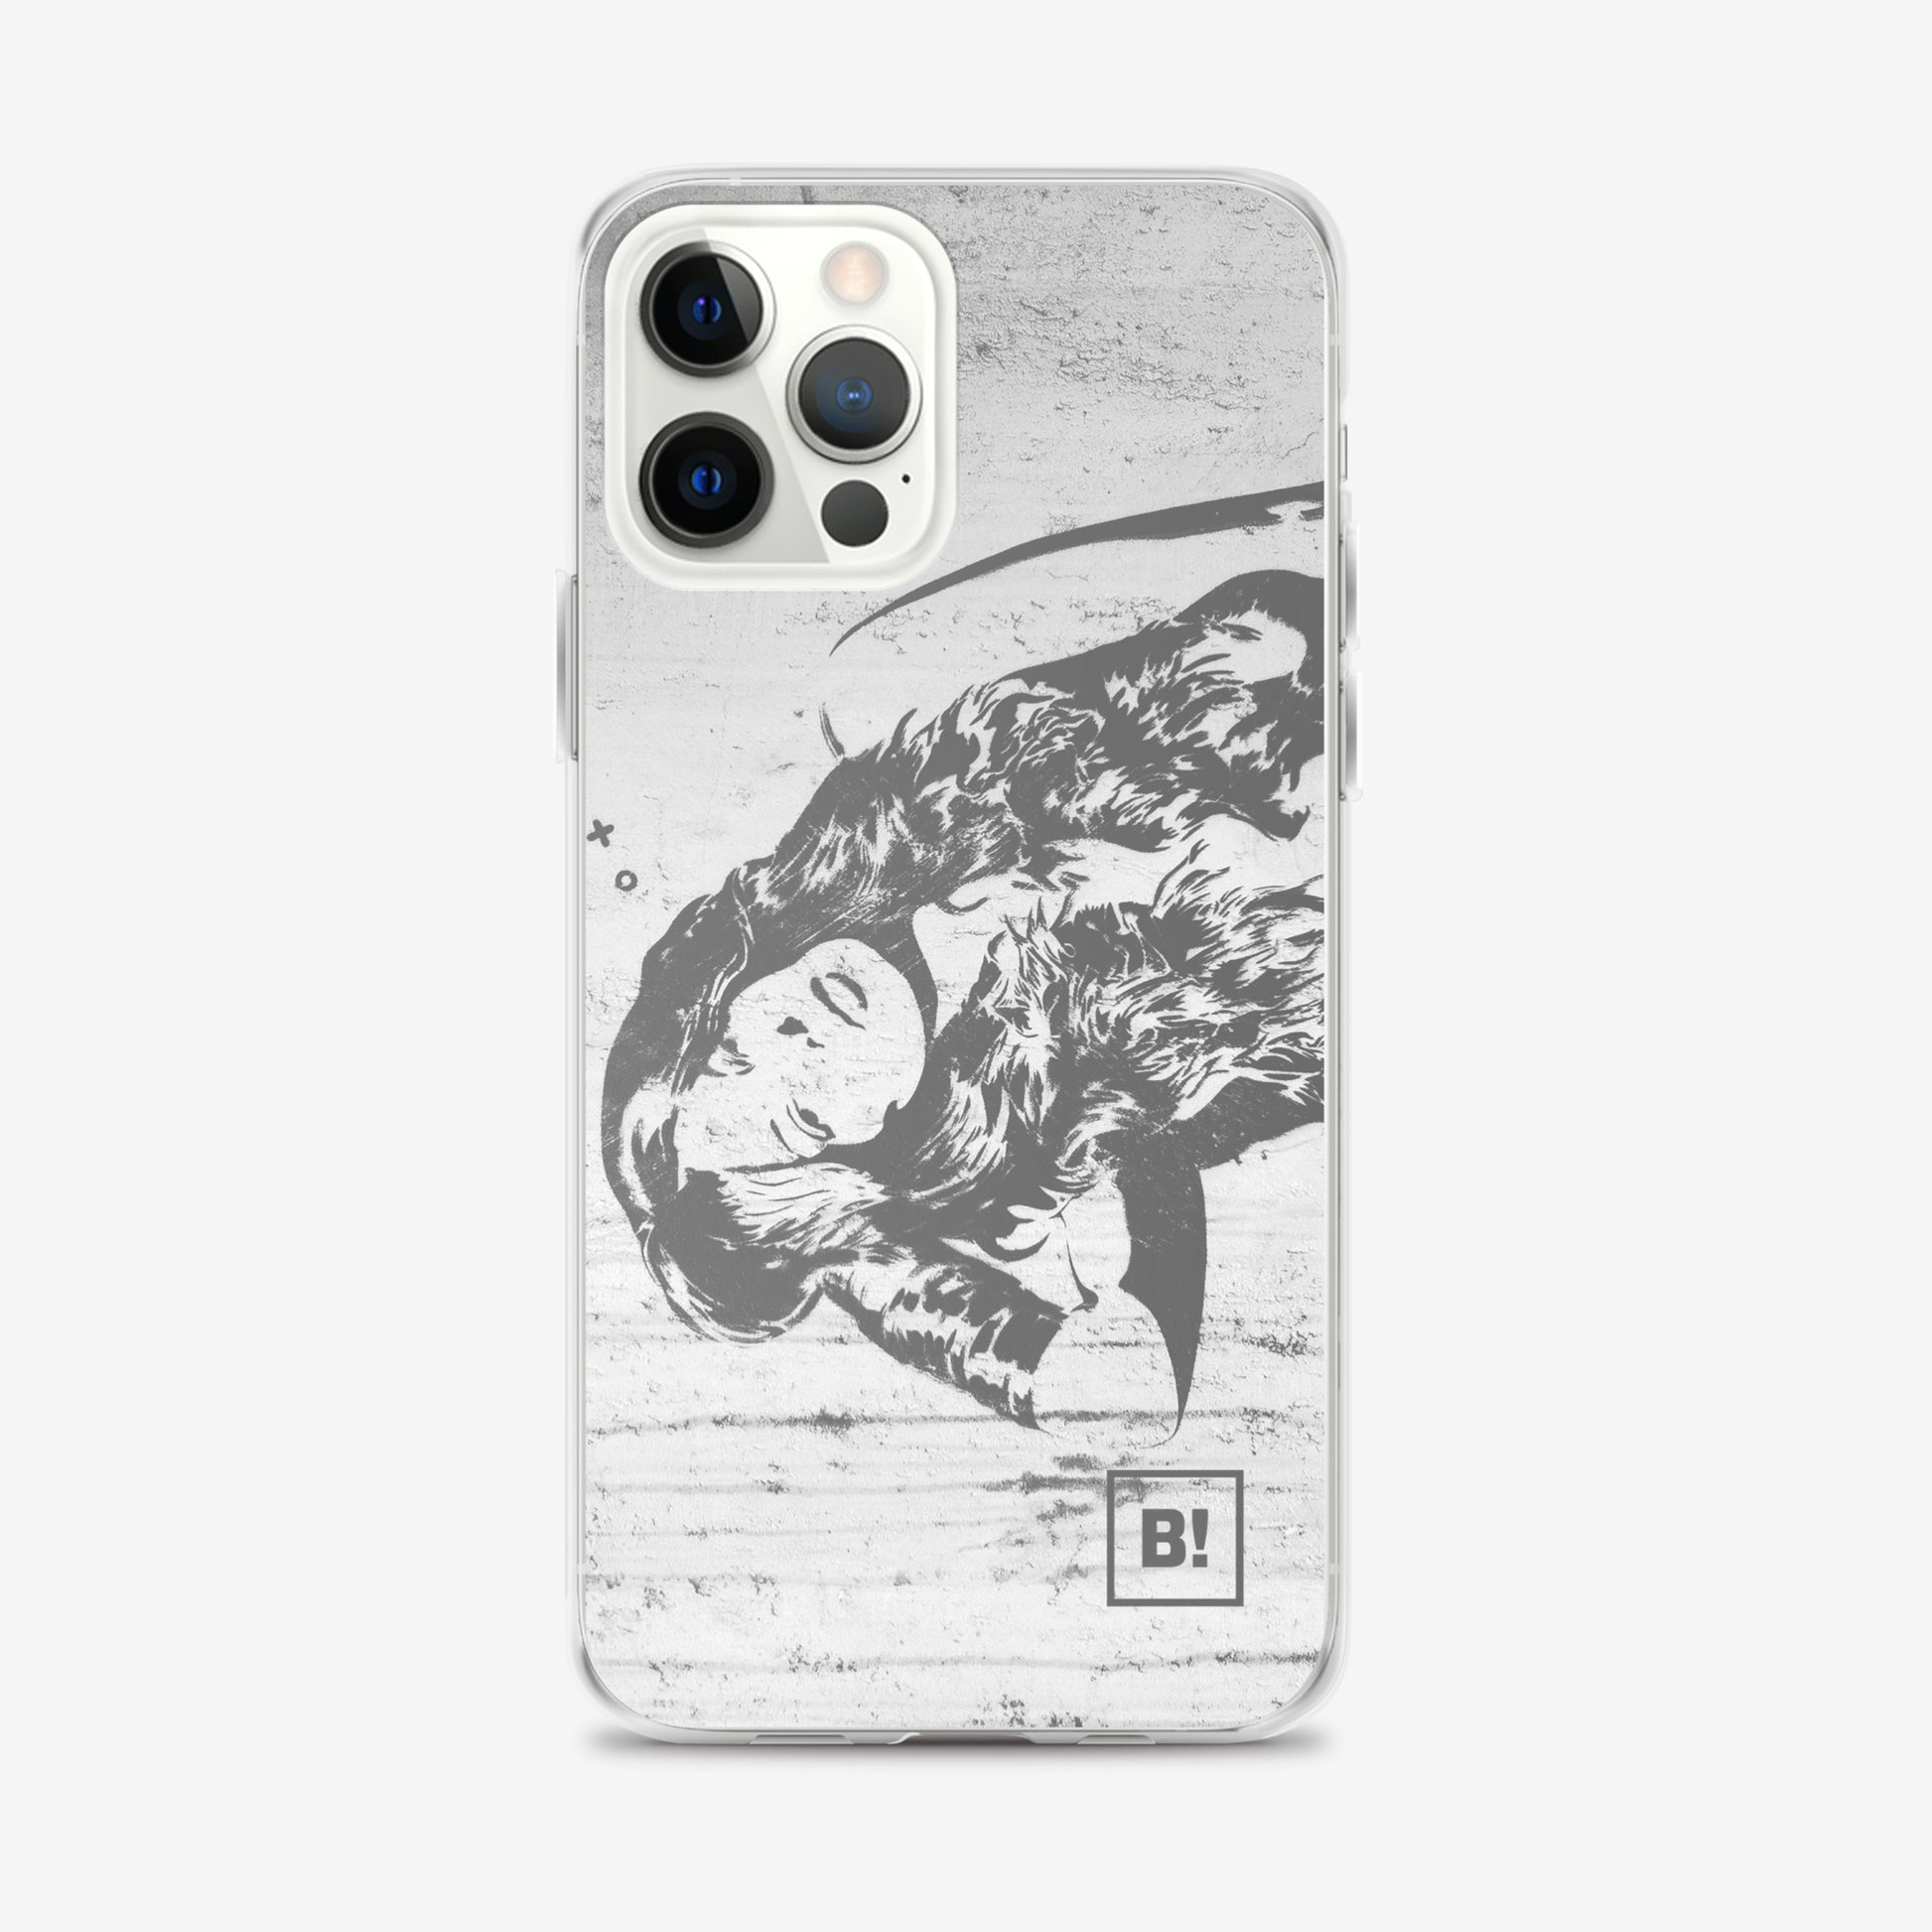 Binspired Street Girl Urban Art iPhone 12 Pro Max Case